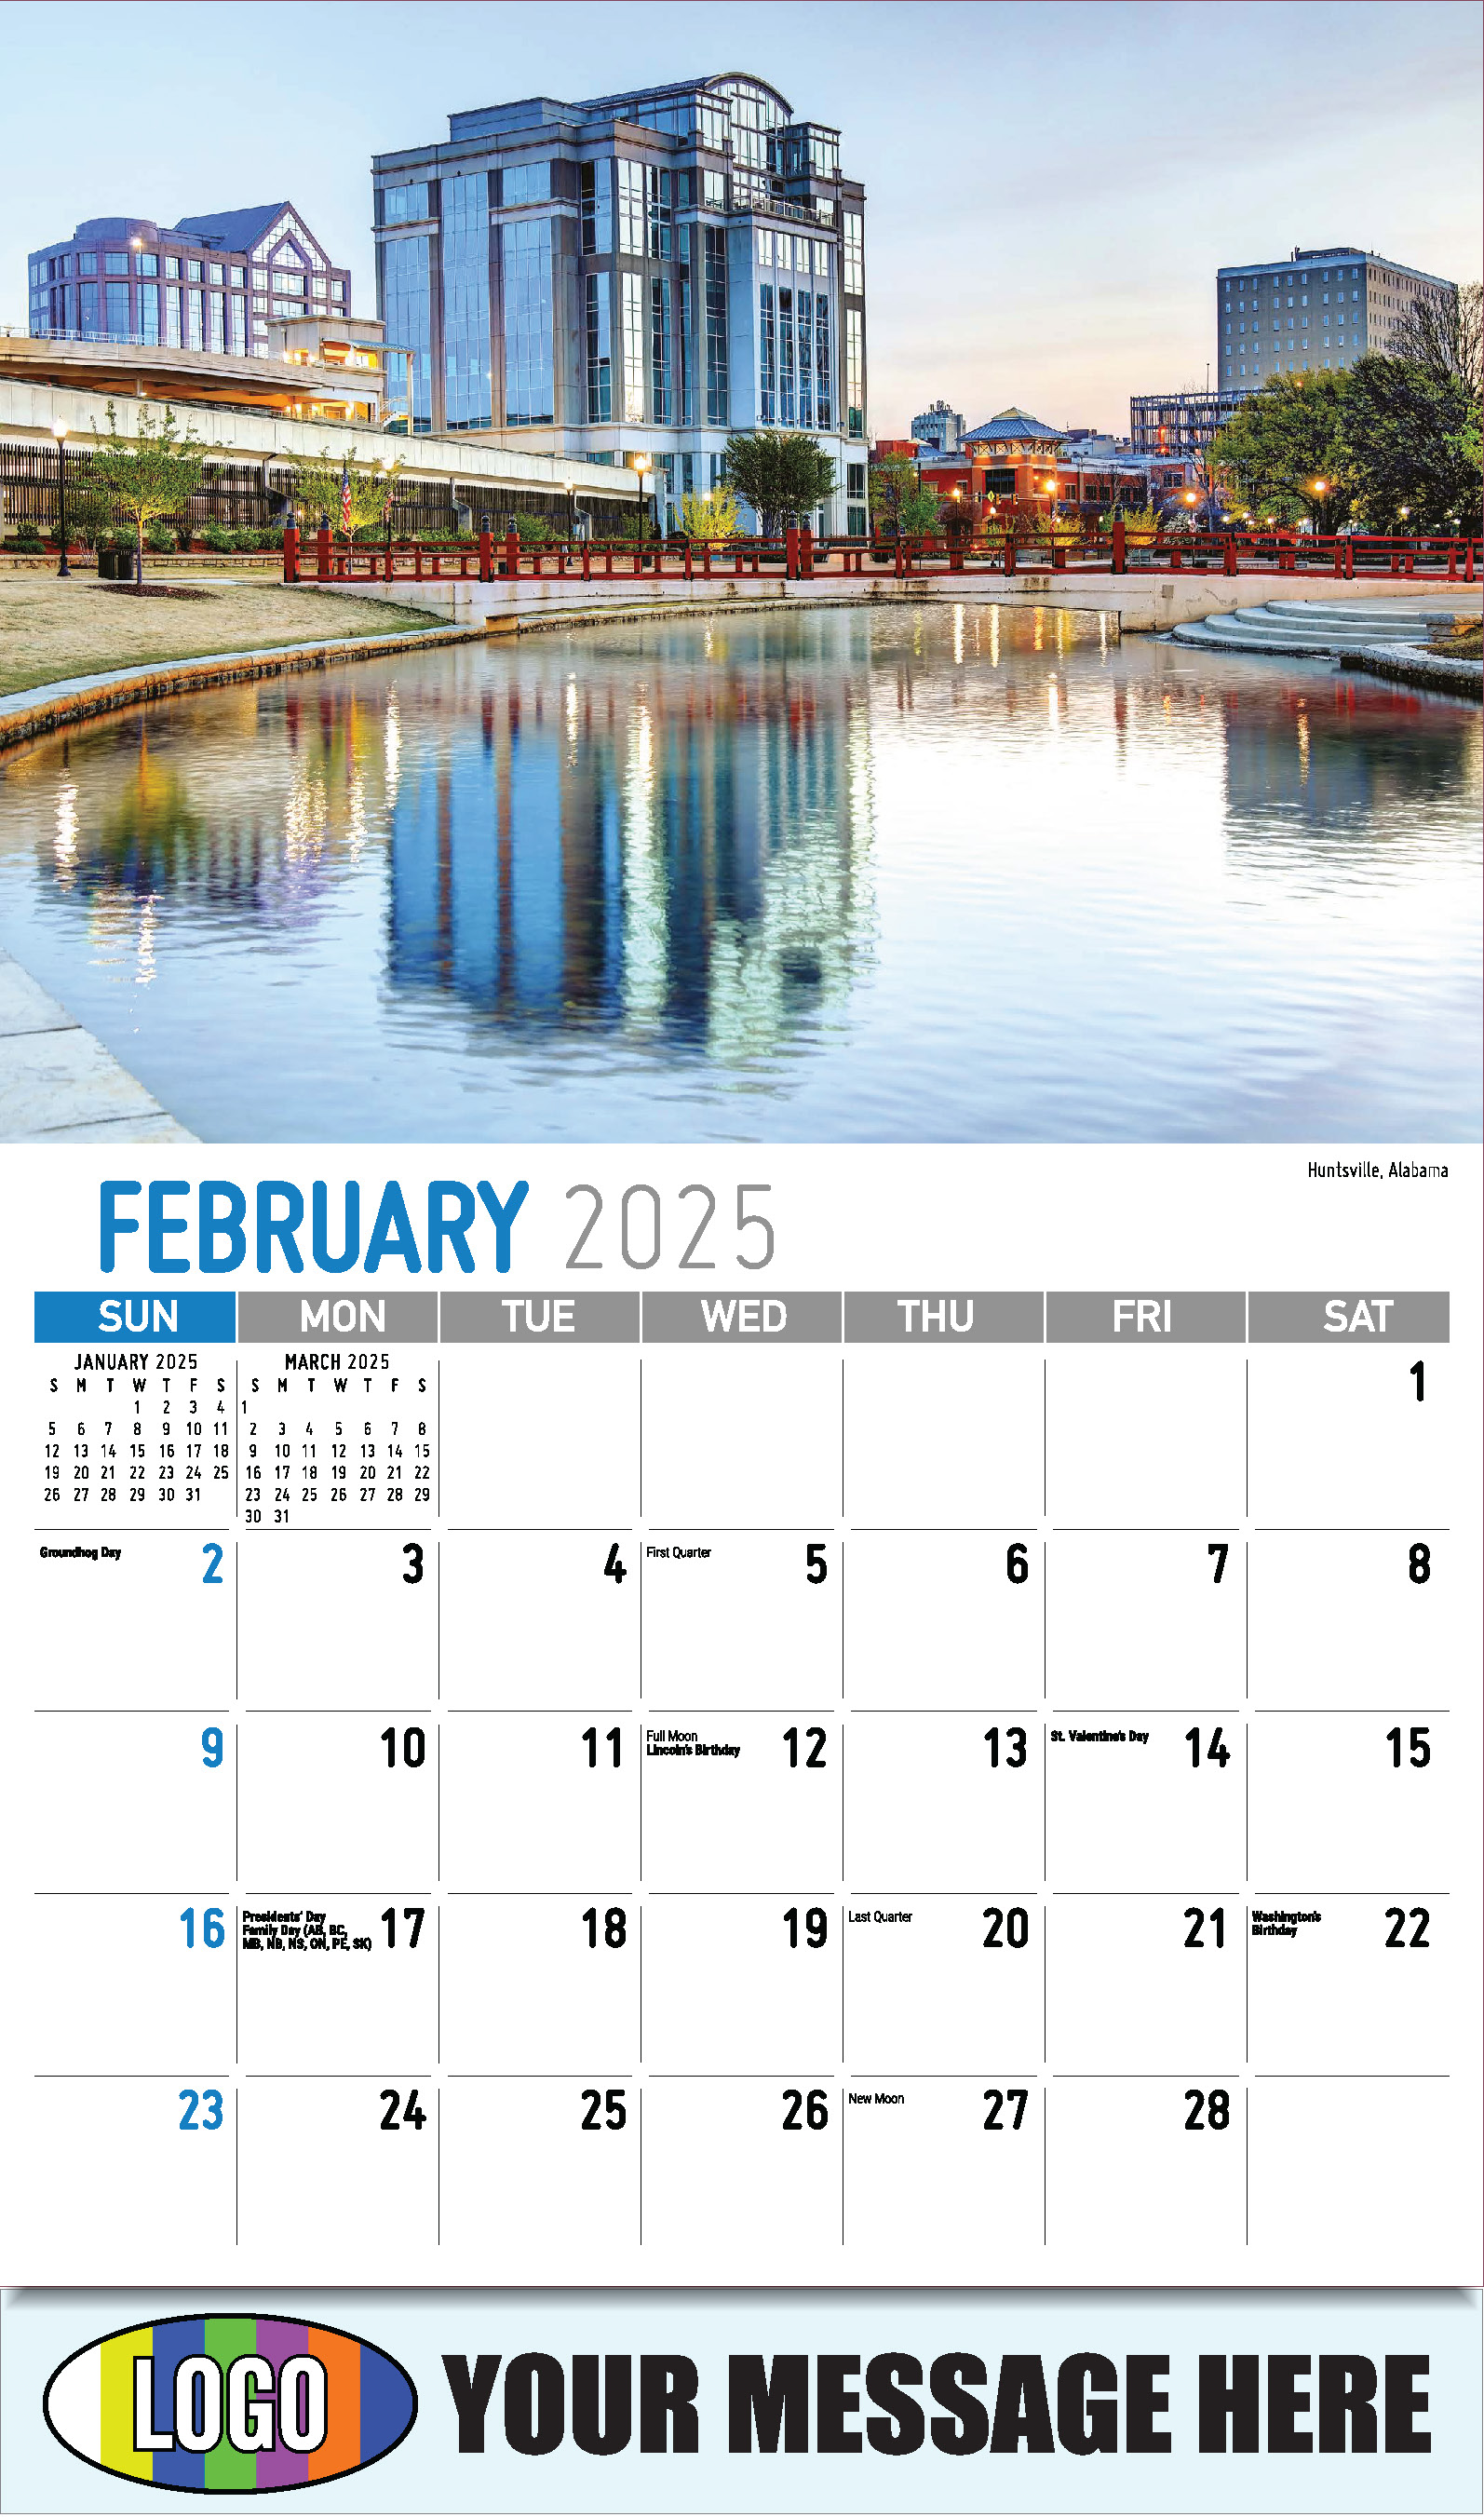 Scenes of America 2025 Business Advertising Wall Calendar - February